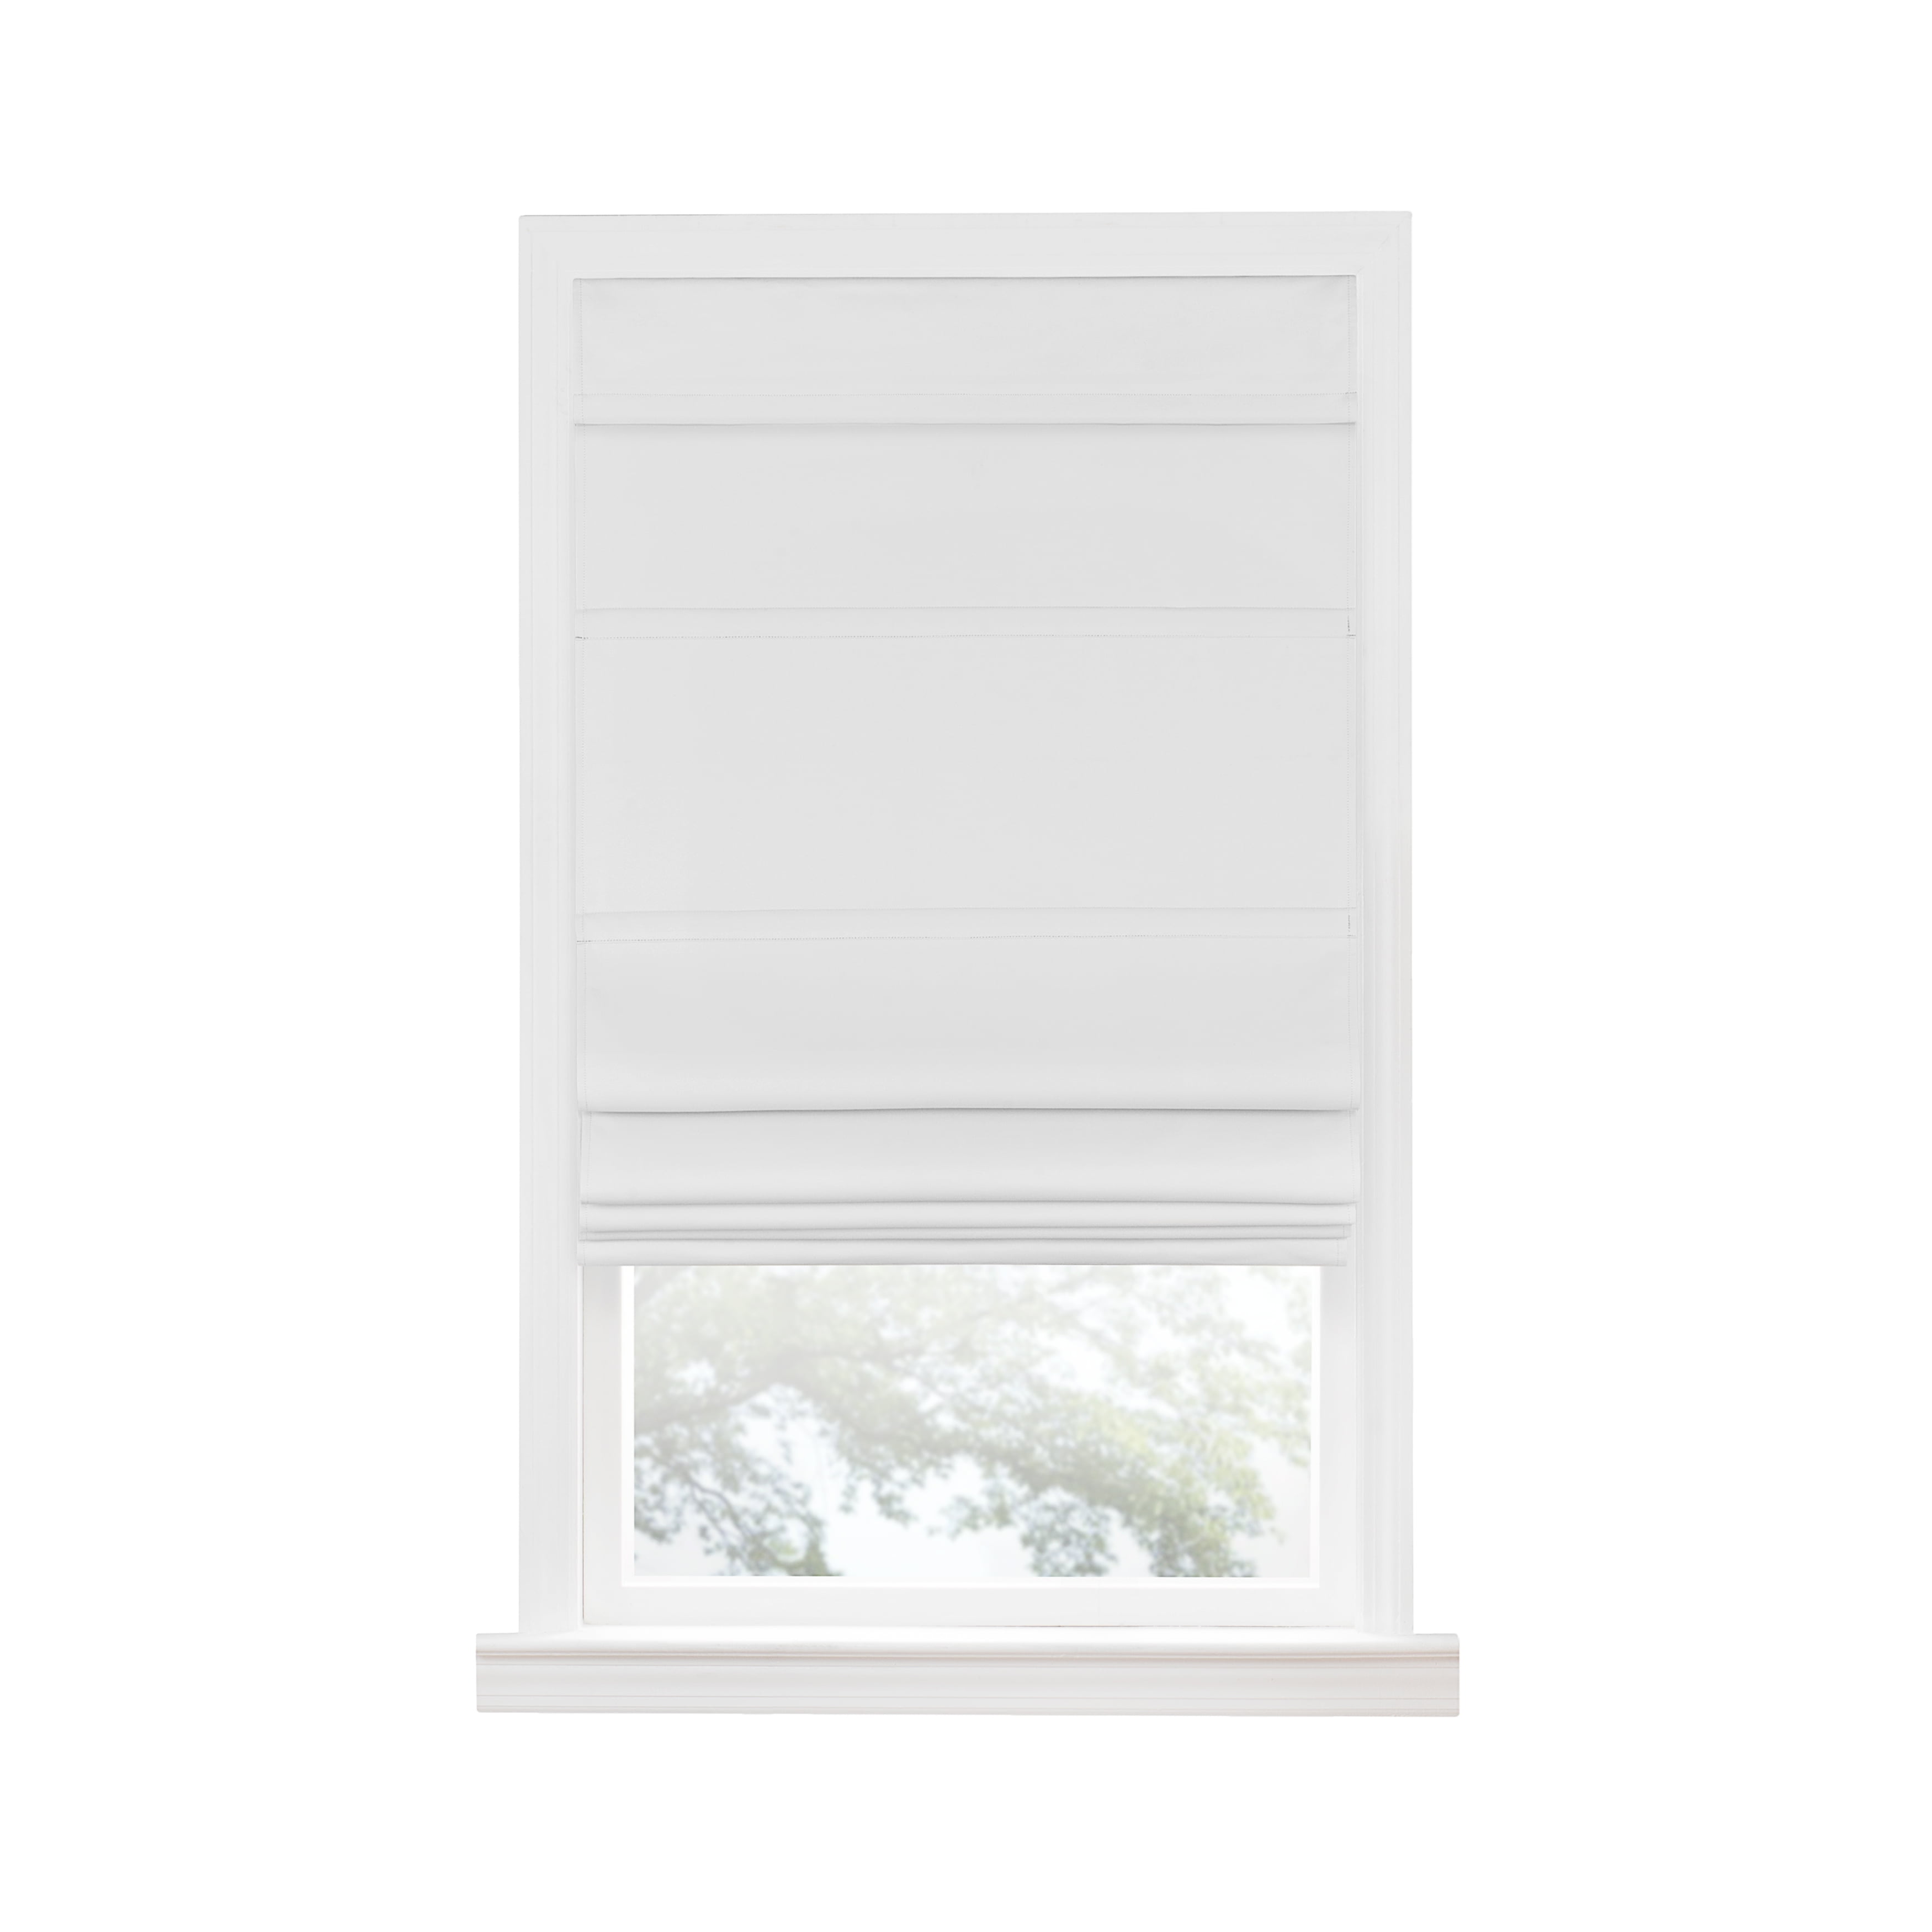 PowerSellerUSA Achim Home Furnishing Cordless Roman 100/% Blackout Window Shade 36 W x 64 L White